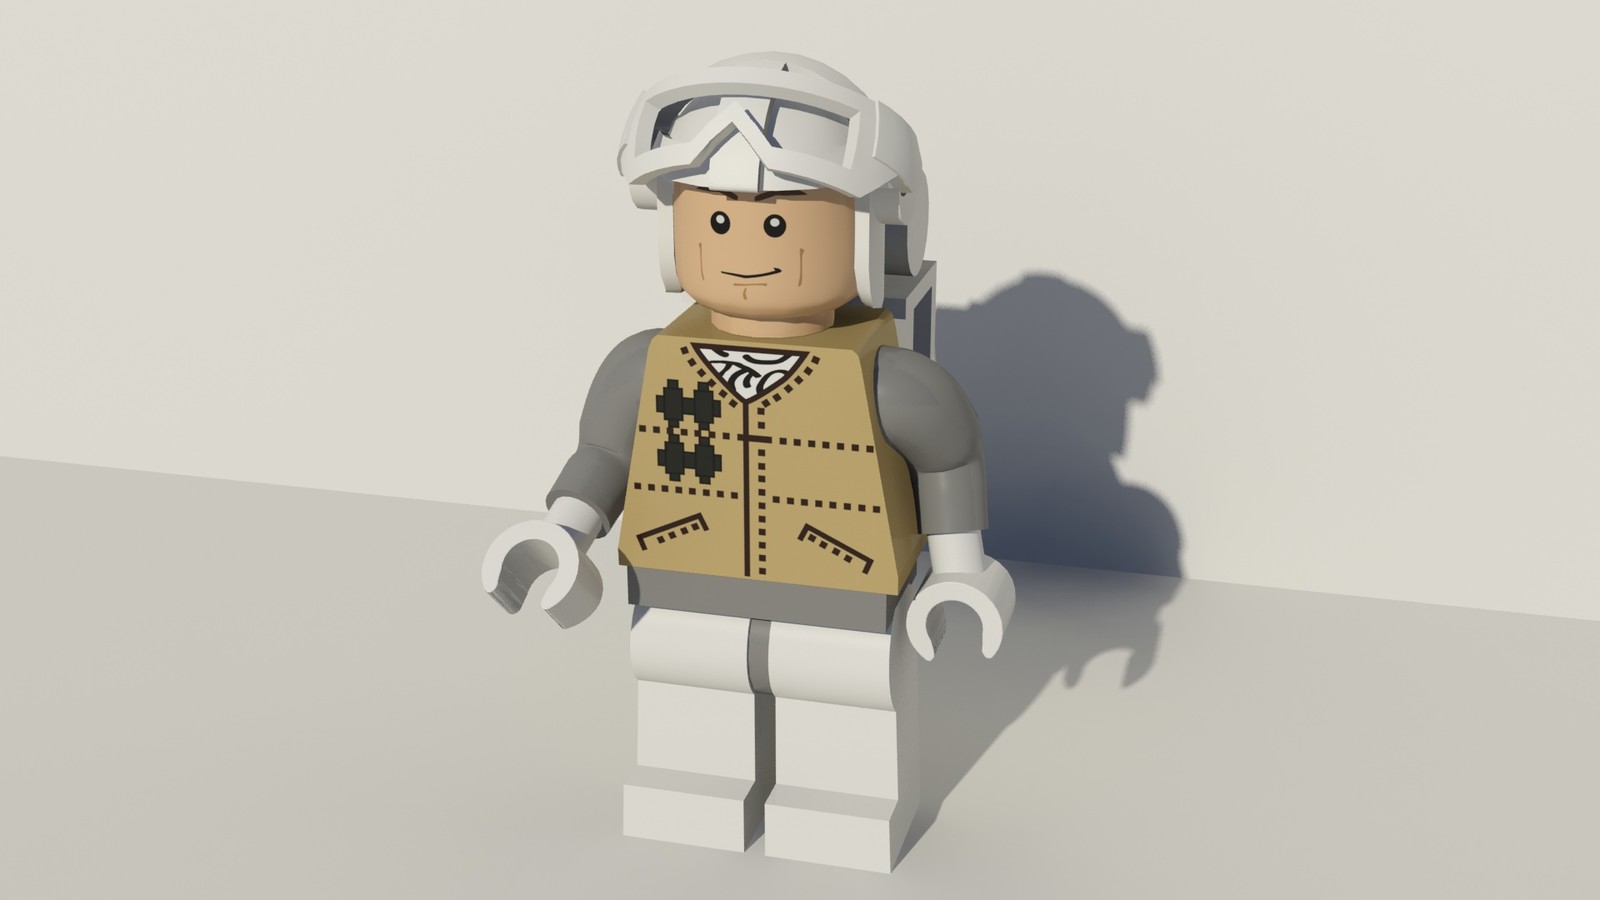 Lego Star Wars Hoth Character